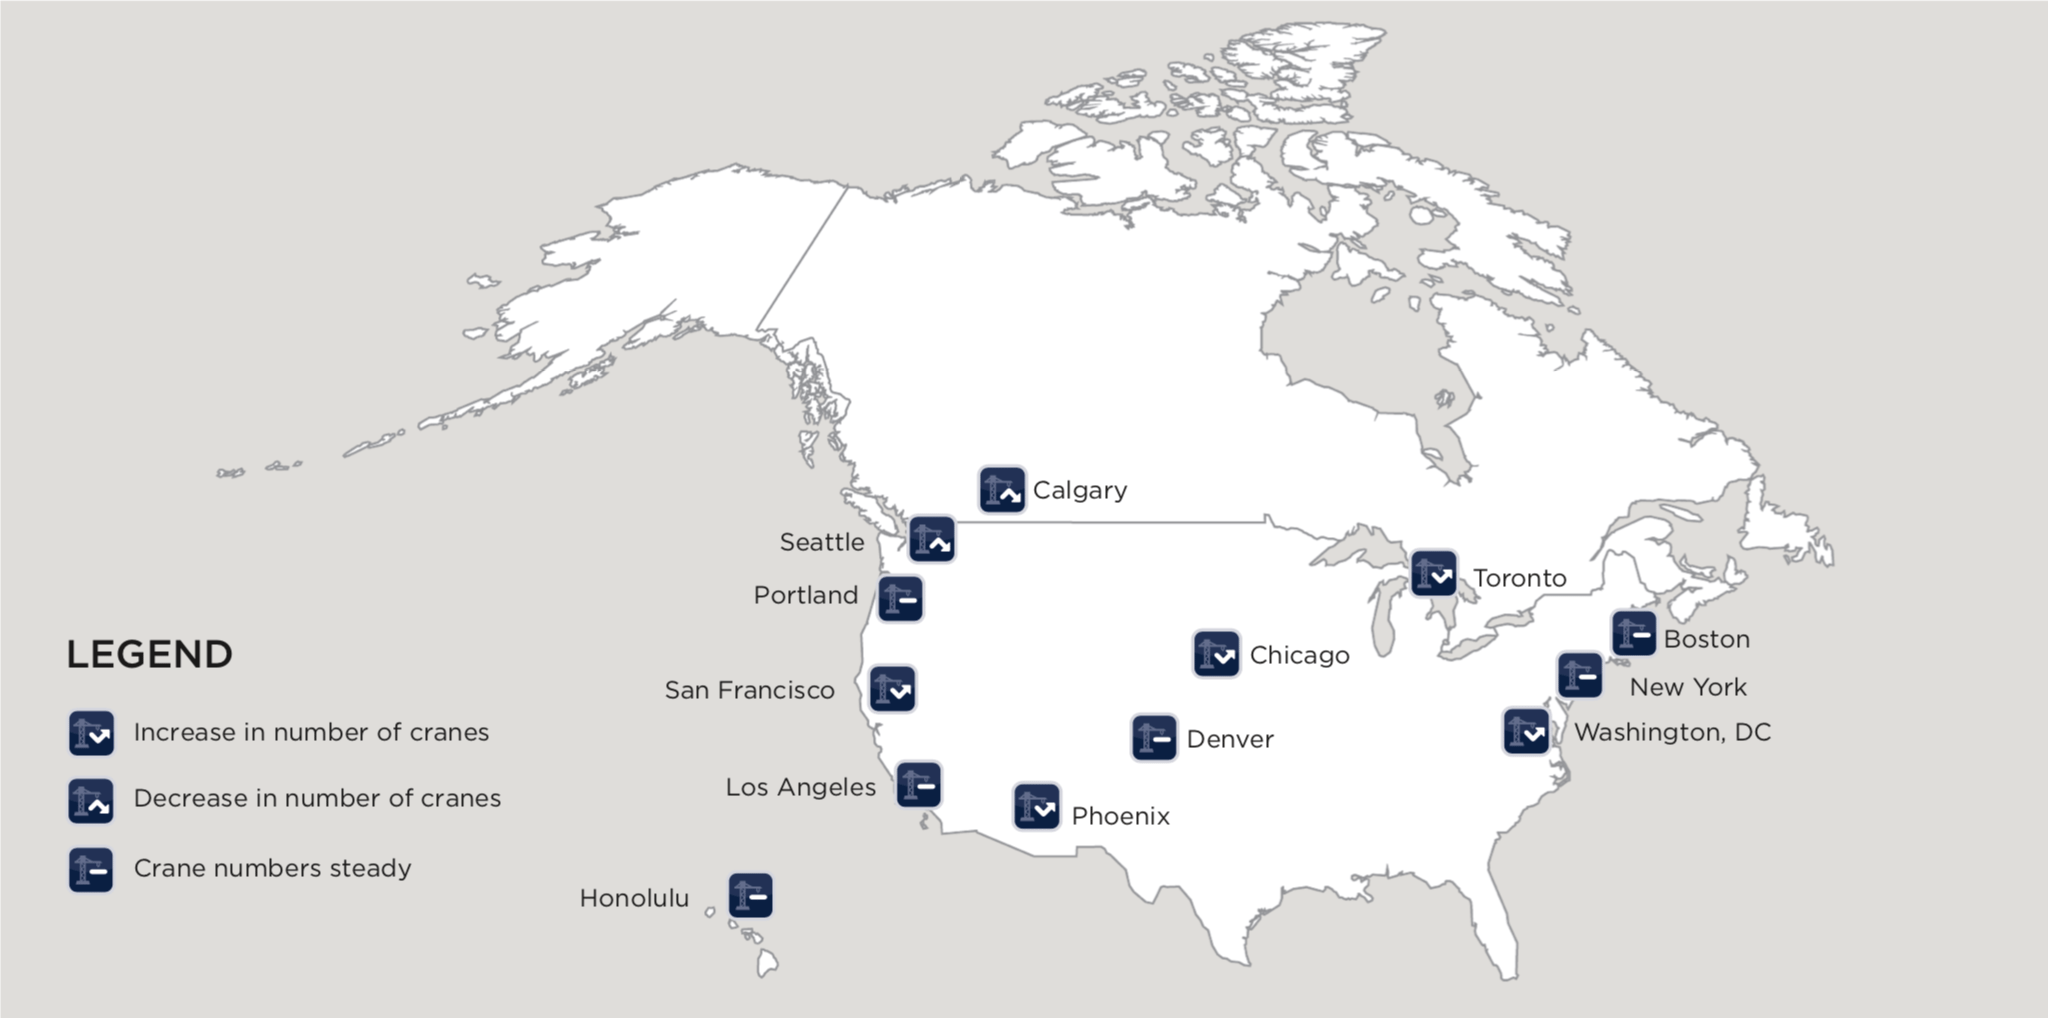 RLB CRANE Index 2018 - Map of North America